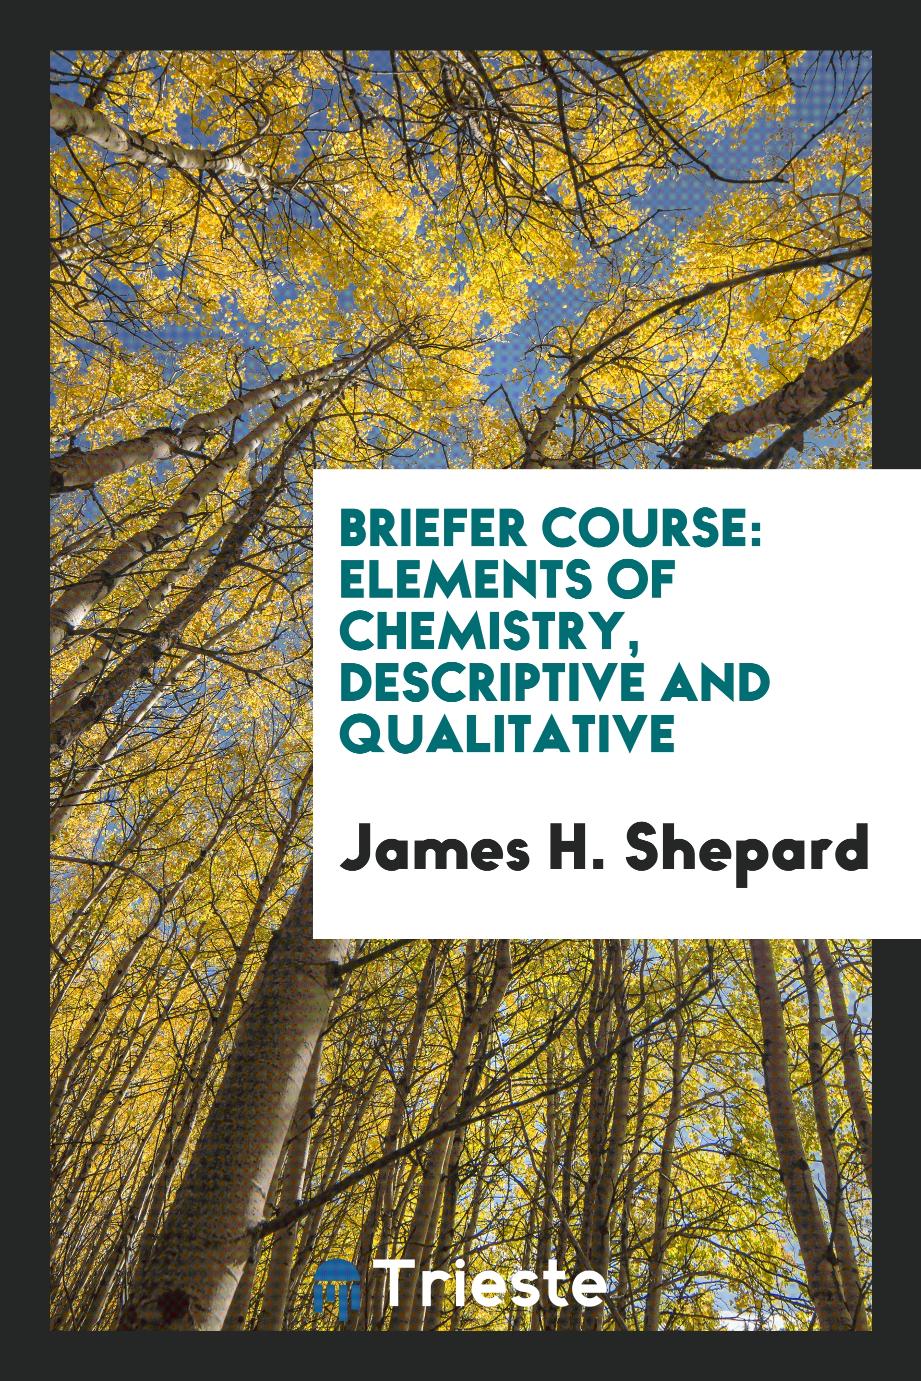 James H. Shepard - Briefer Course: Elements of Chemistry, Descriptive and Qualitative